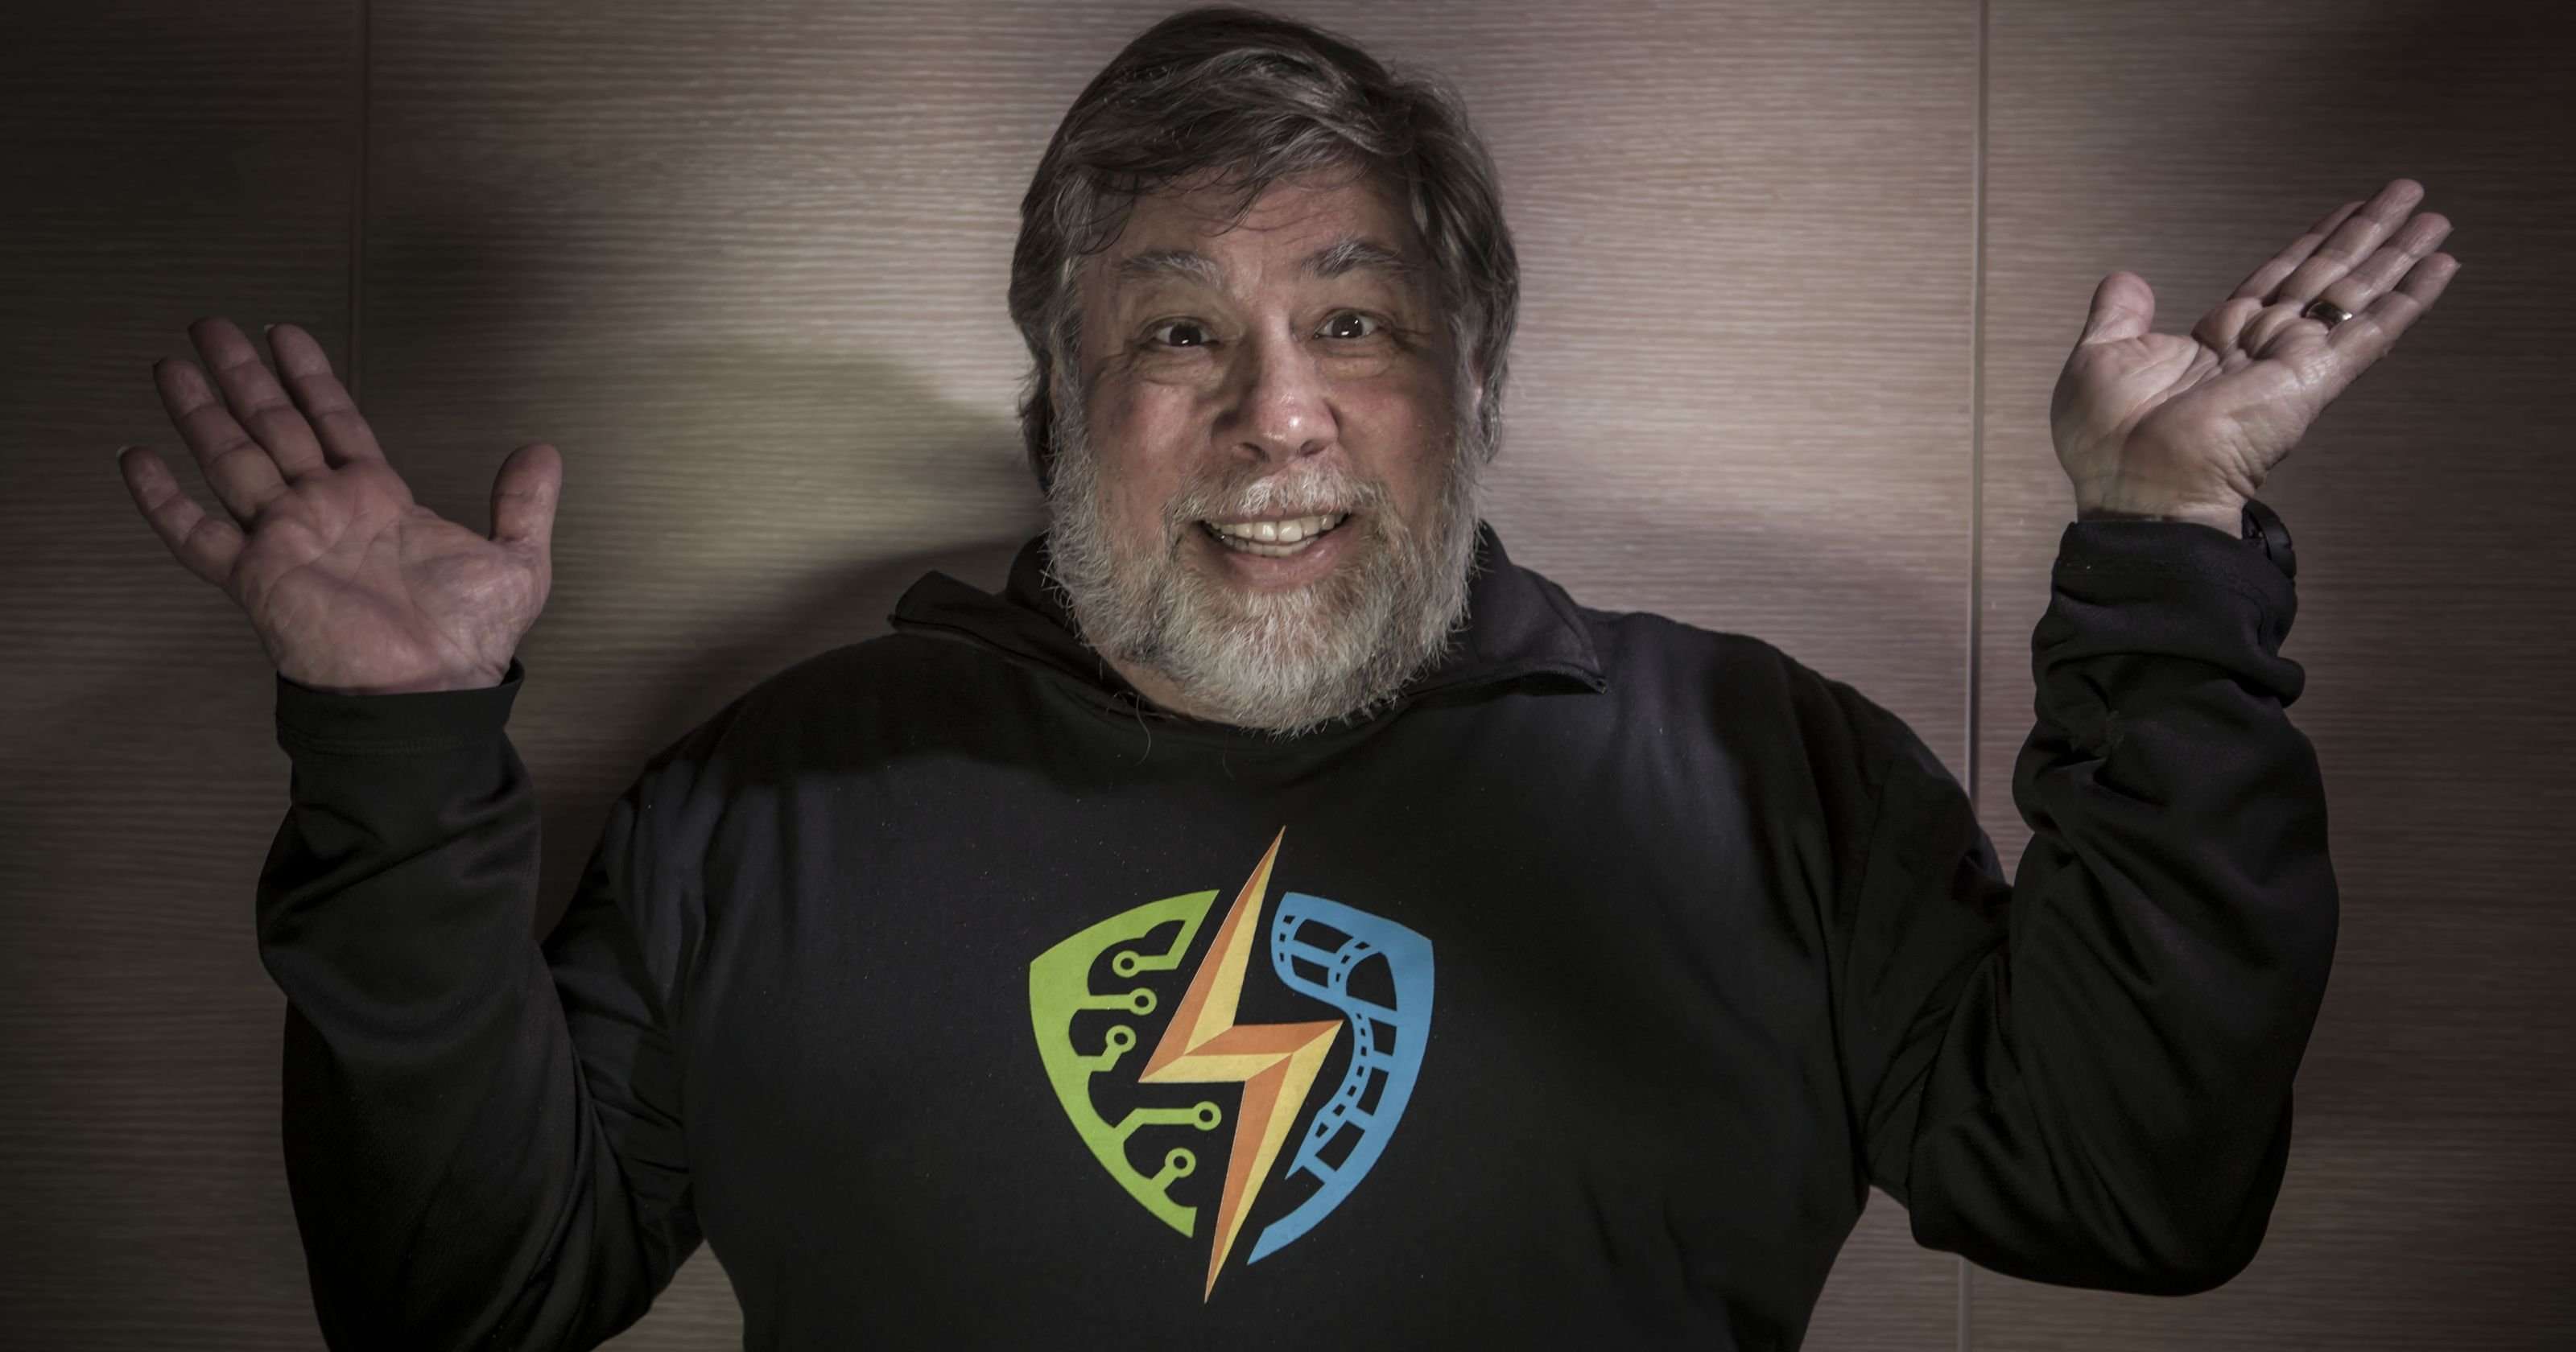 image for Apple co-founder Steve Wozniak says he's left Facebook over data collection